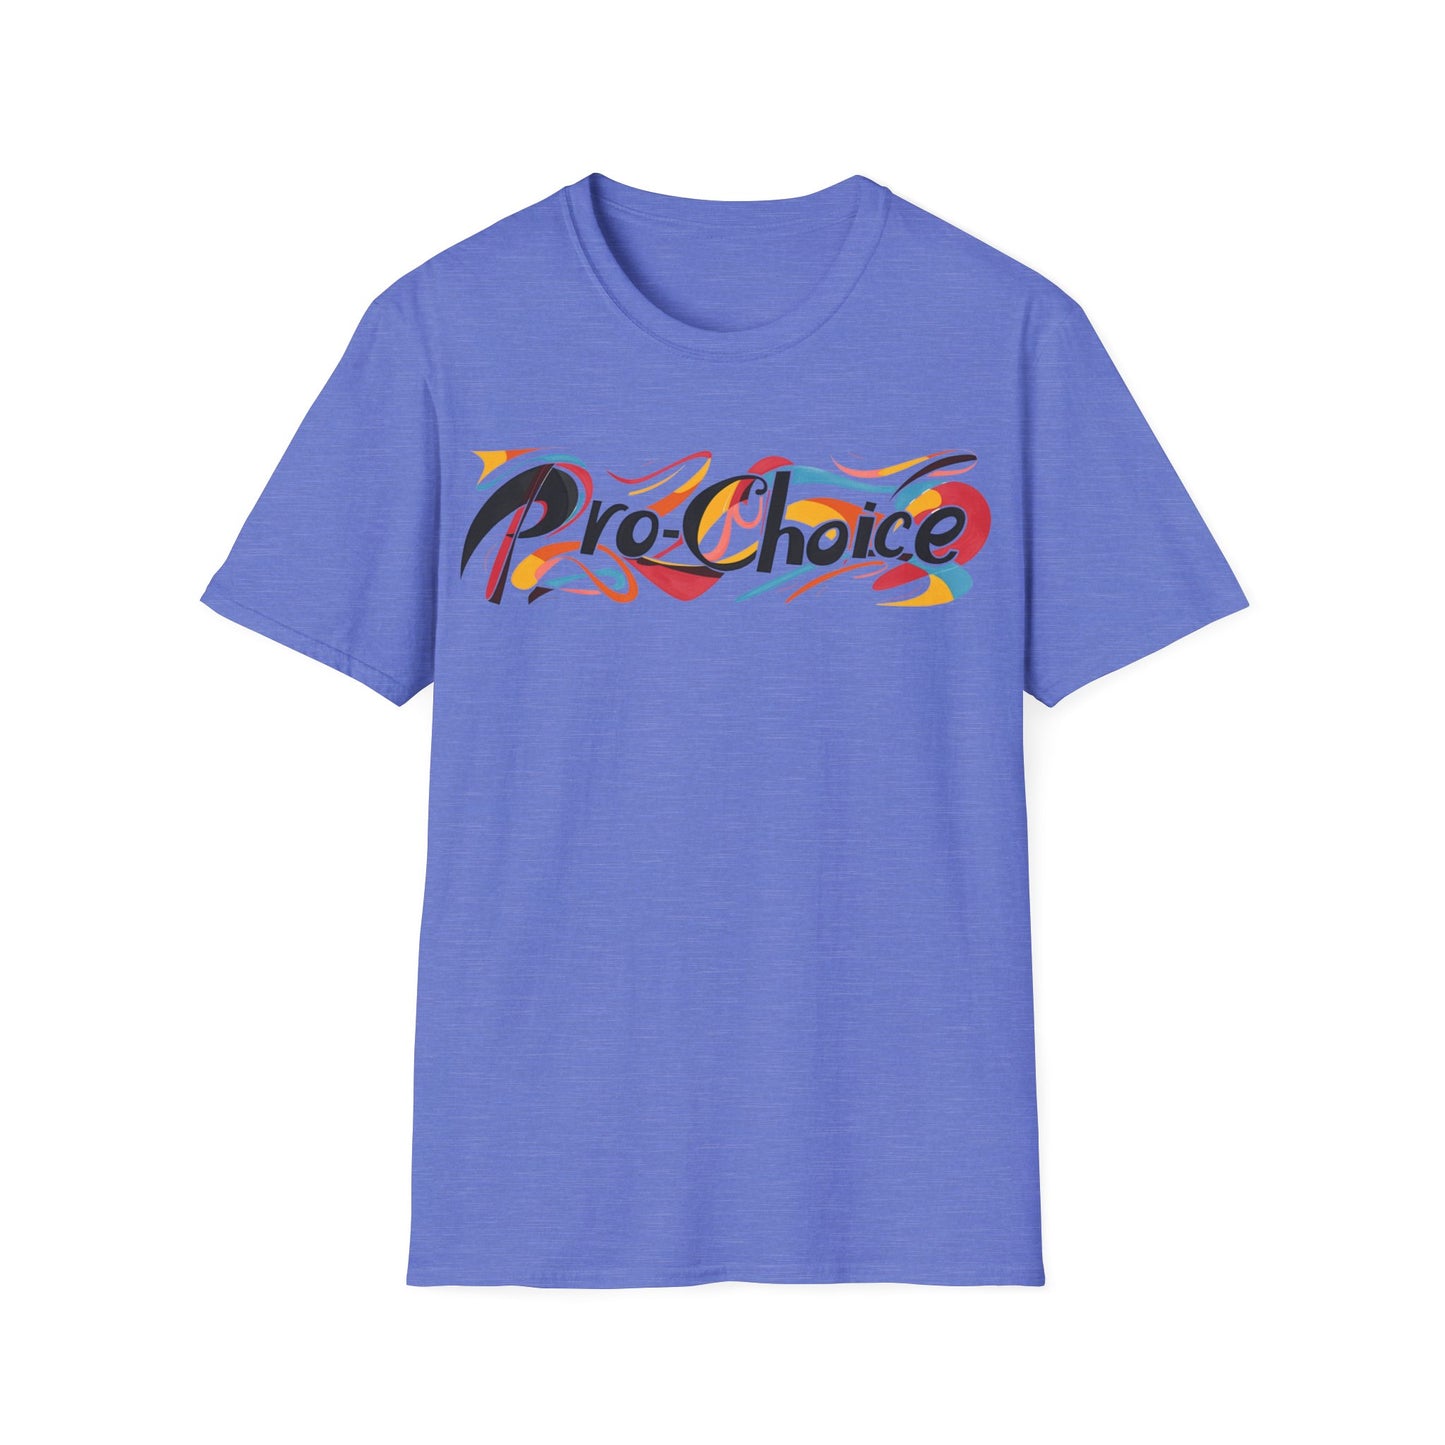 Pro-Choice T-Shirt Women's Rights tshirt Feminist Reproductive Rights tshirt Activist Statement tee